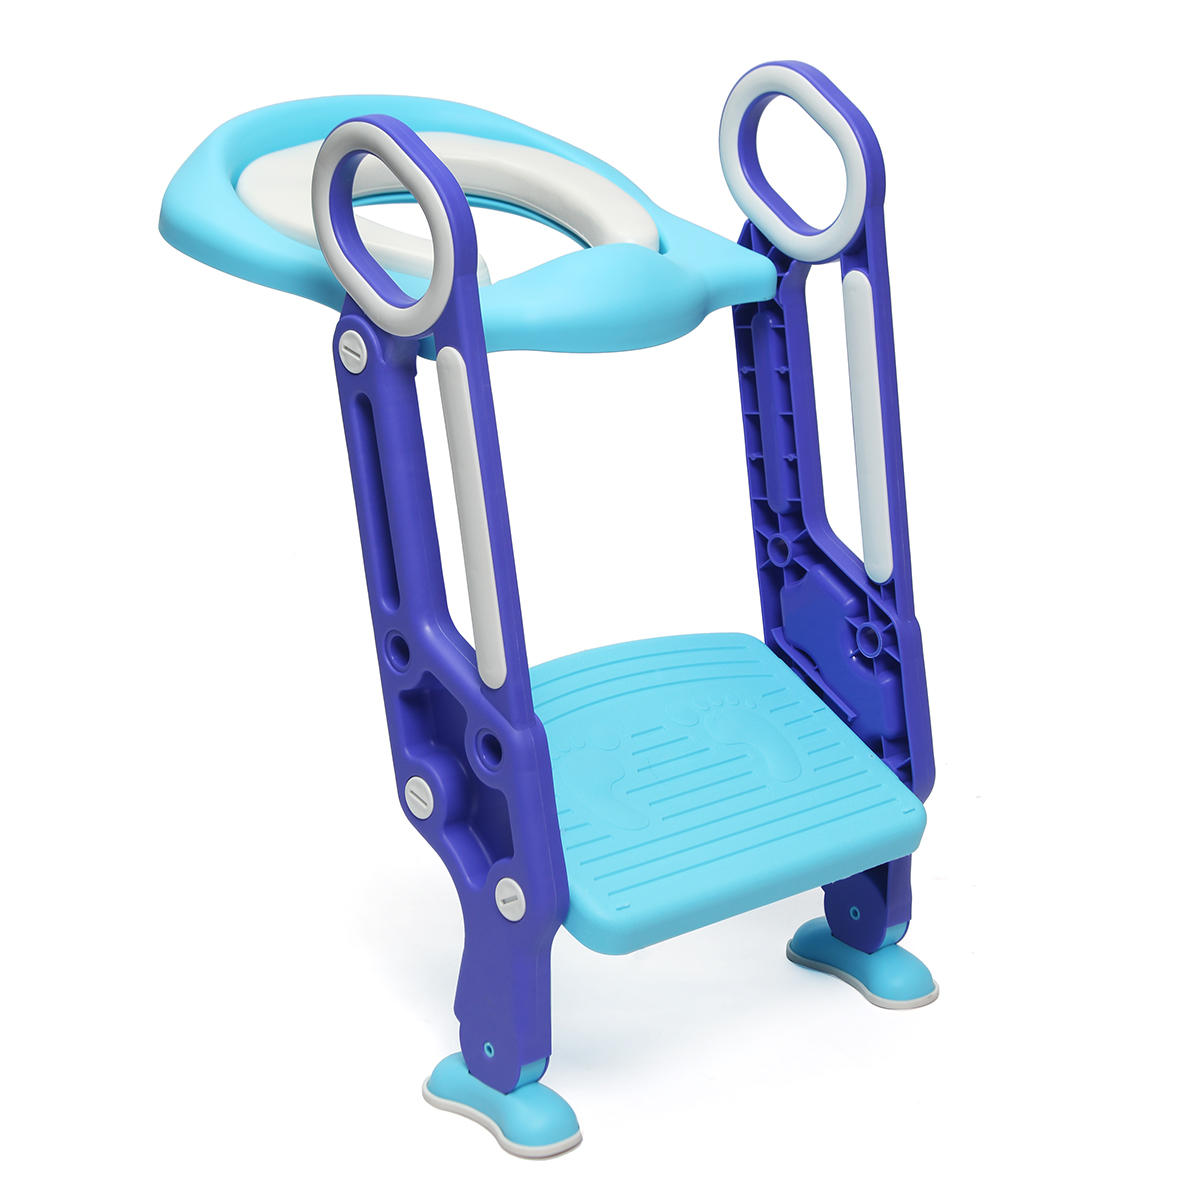 Kids Baby Toddler Potty Training Toilet Seat & Step Ladder Soft Cushion